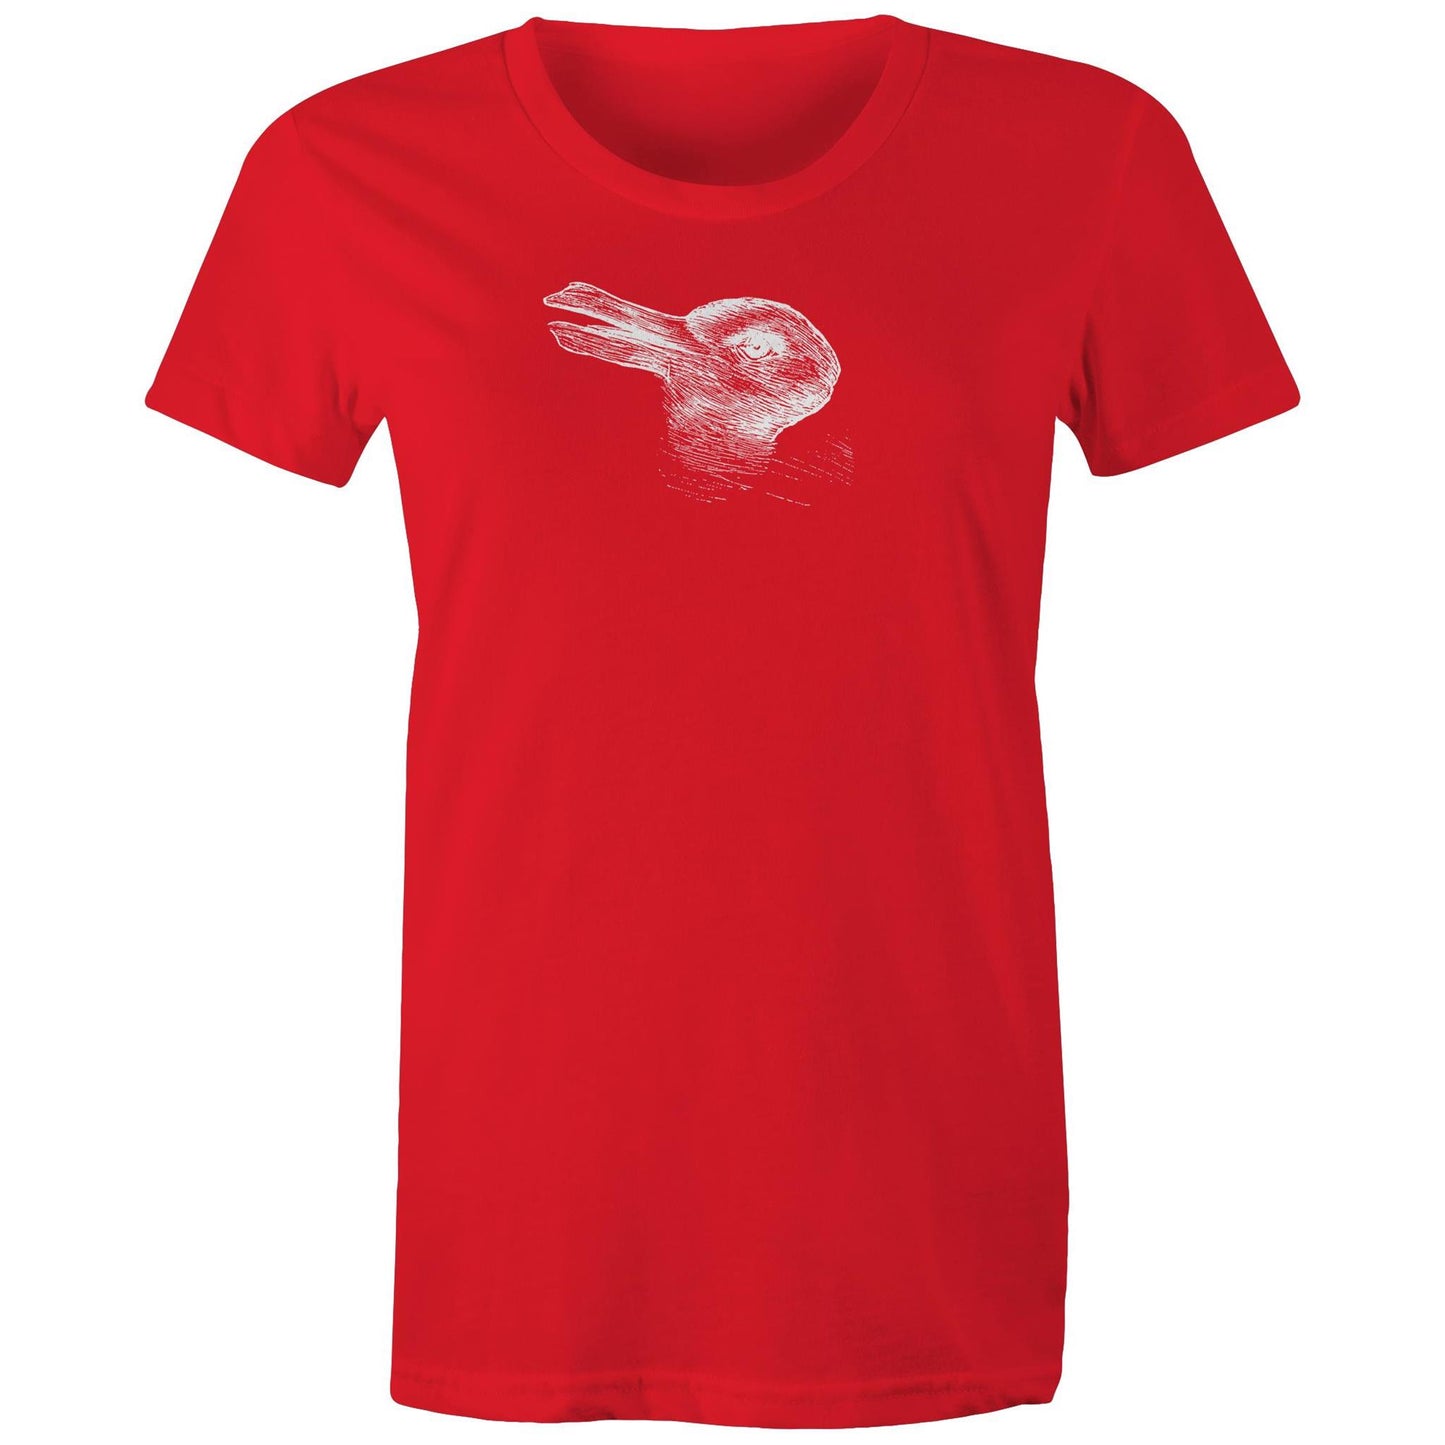 Duck-Rabbit T Shirts for Women